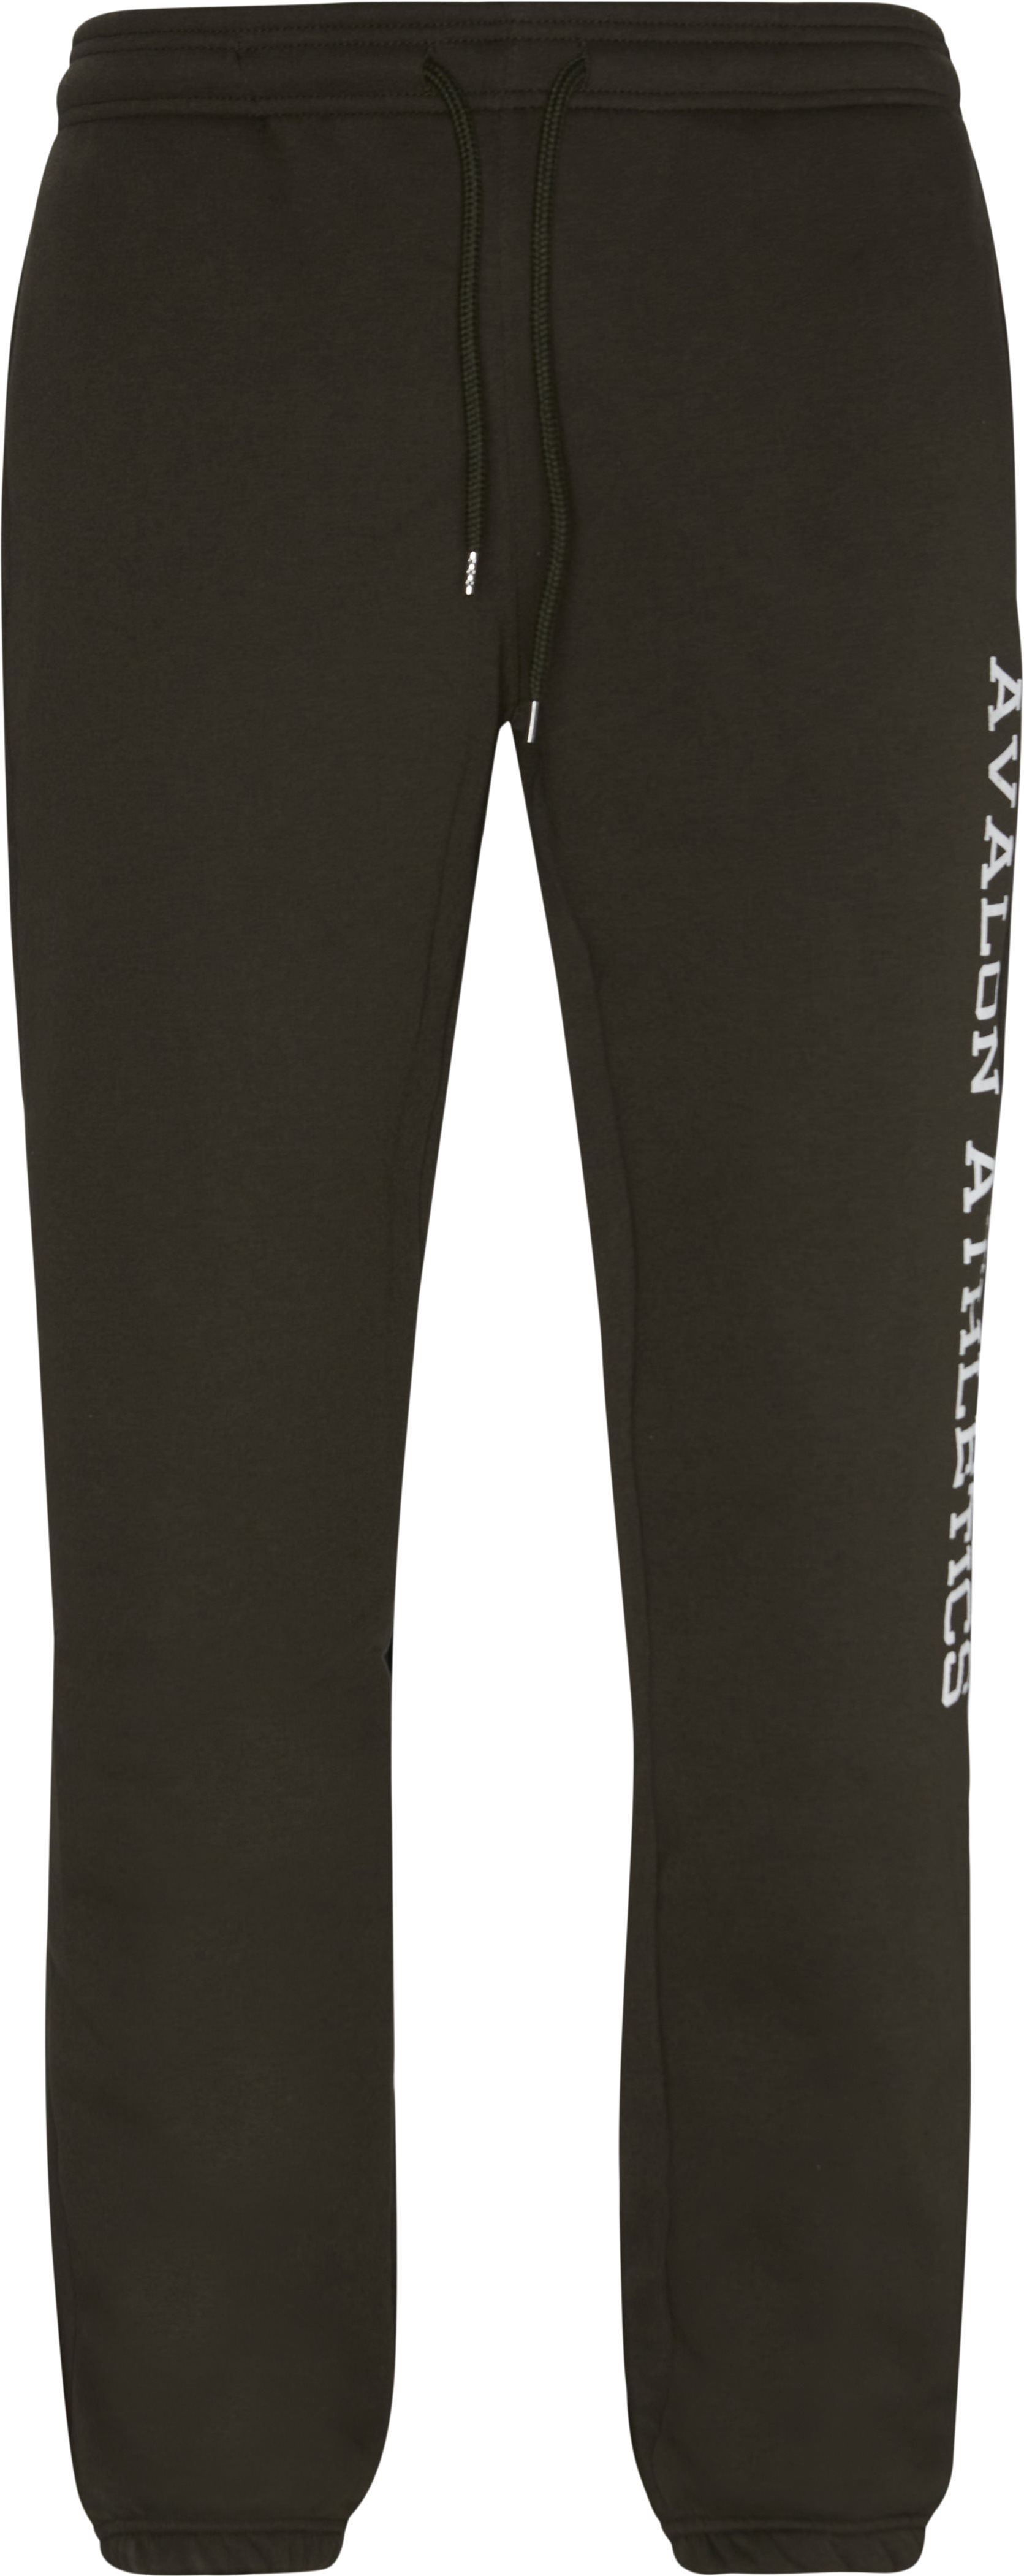 Brickwell Pants - Bukser - Regular fit - Army